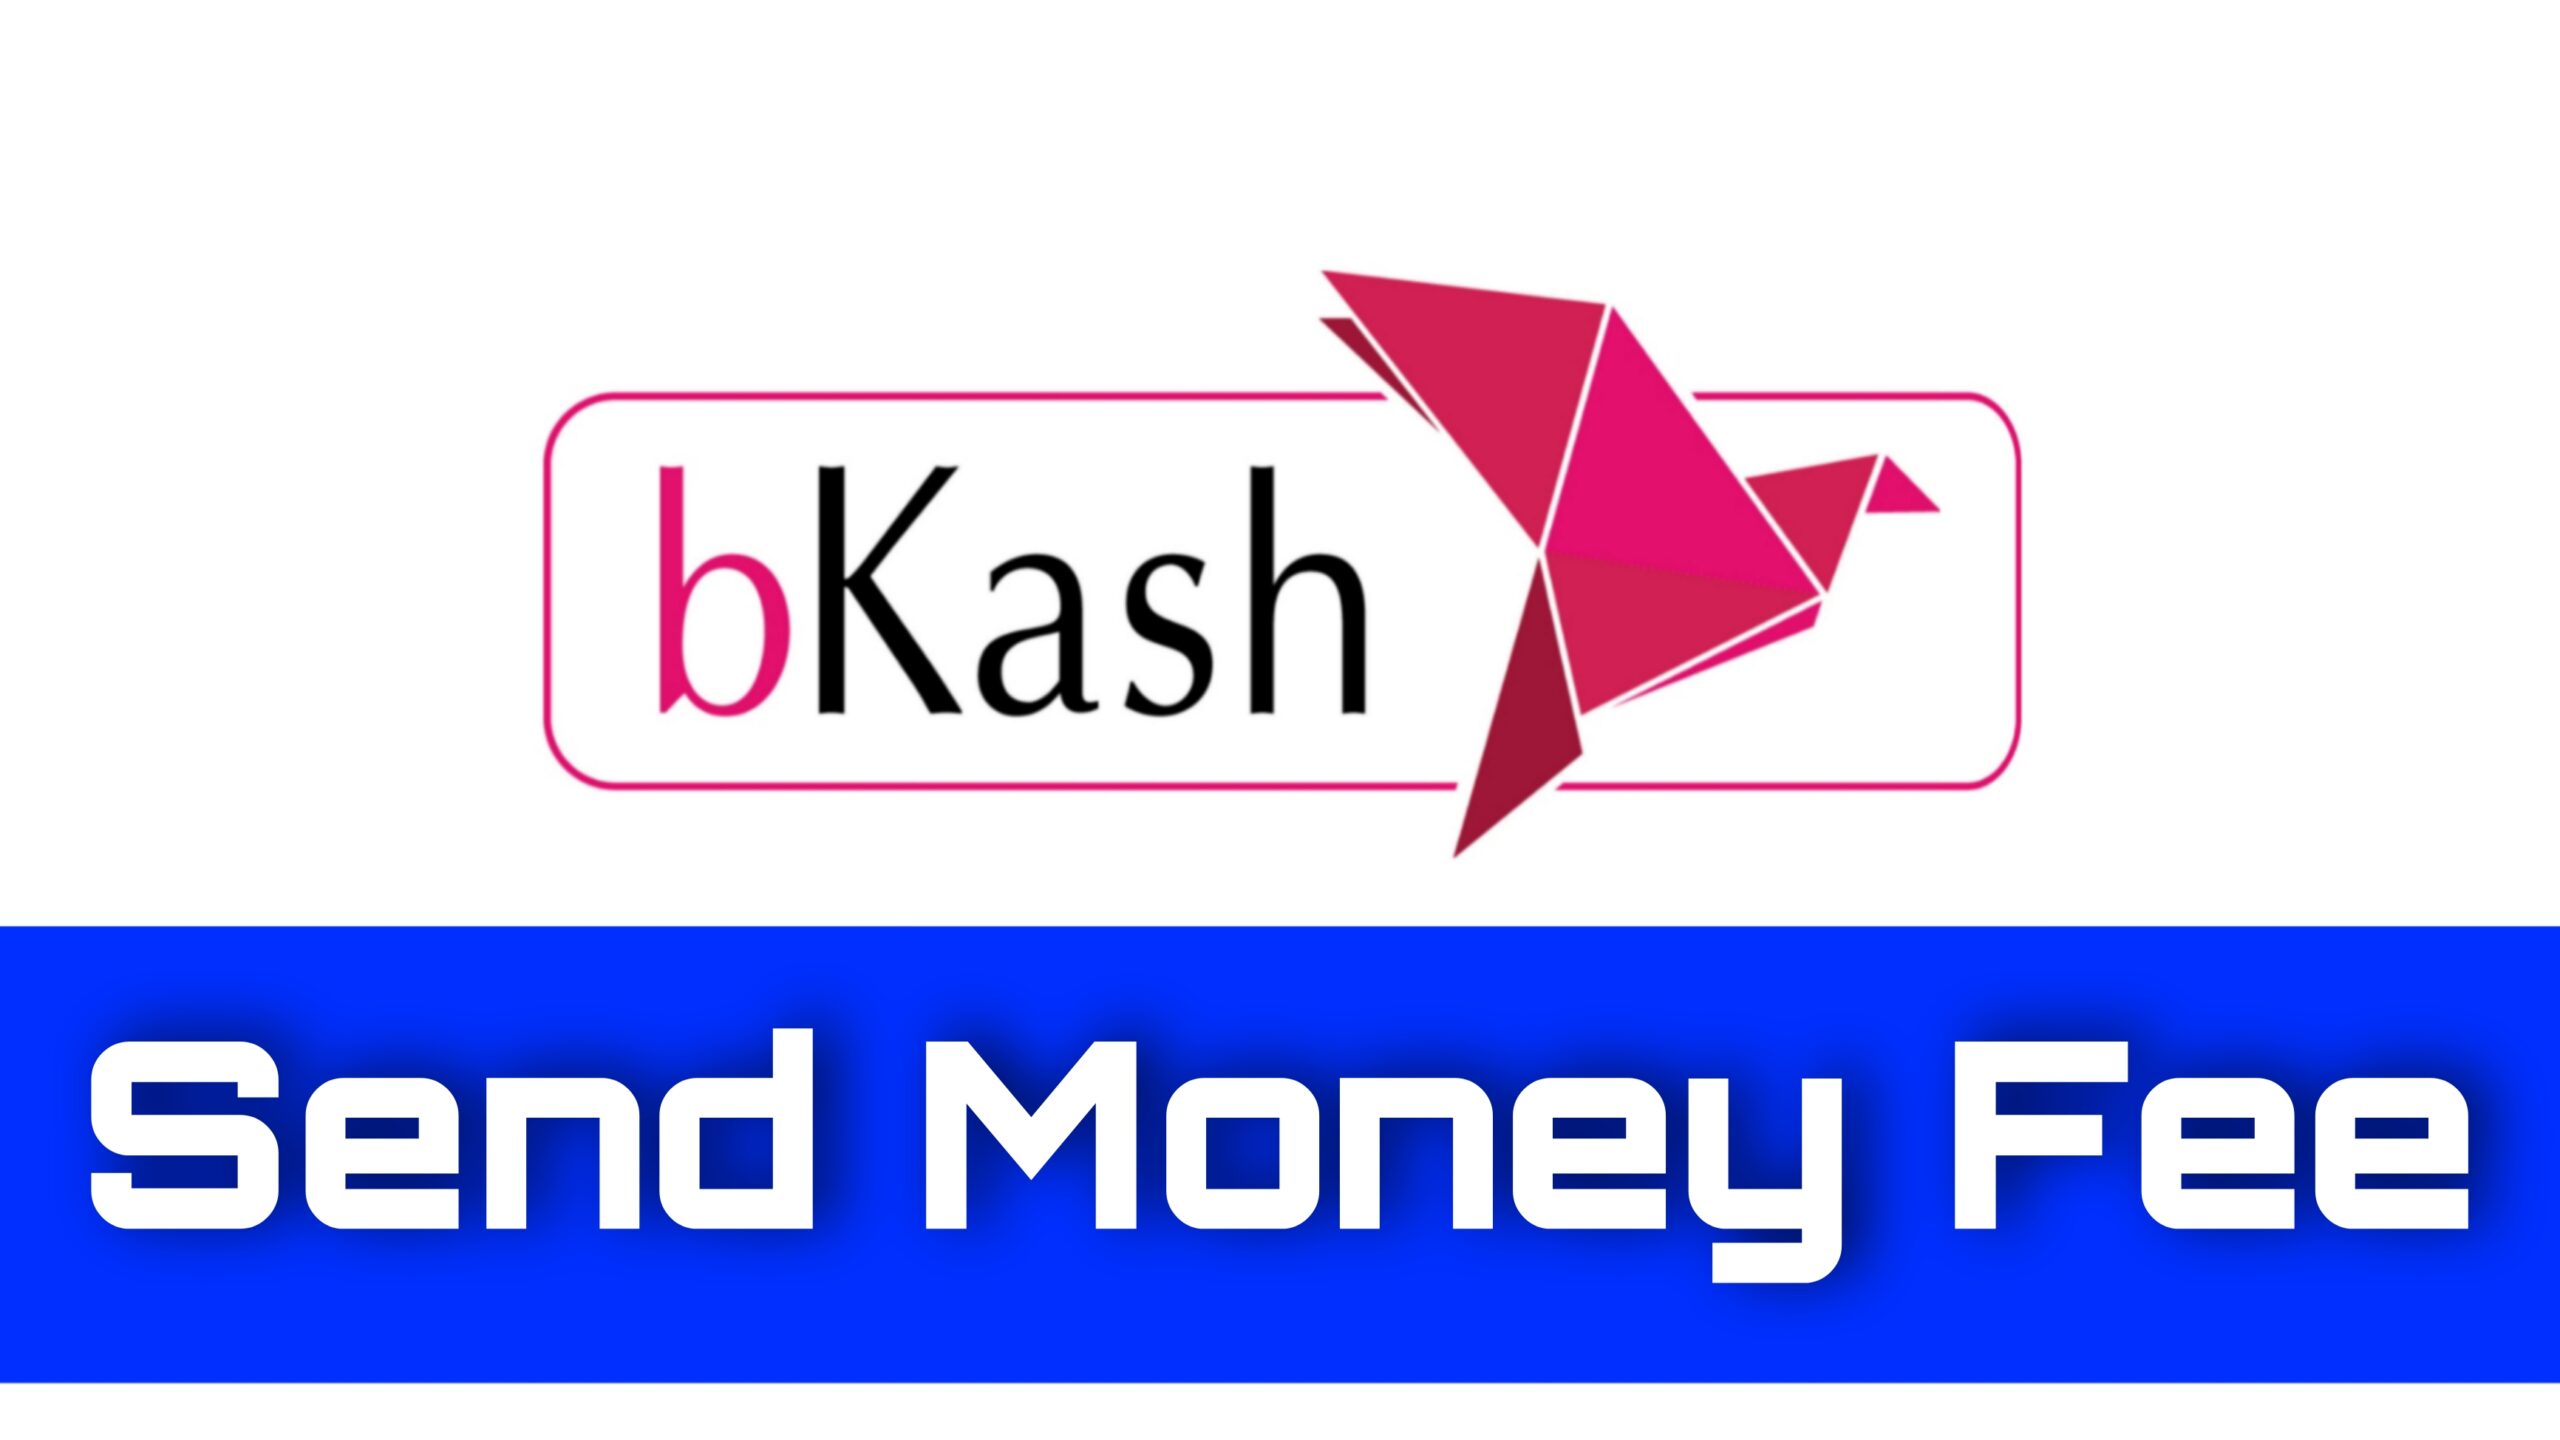 bkash send money fee